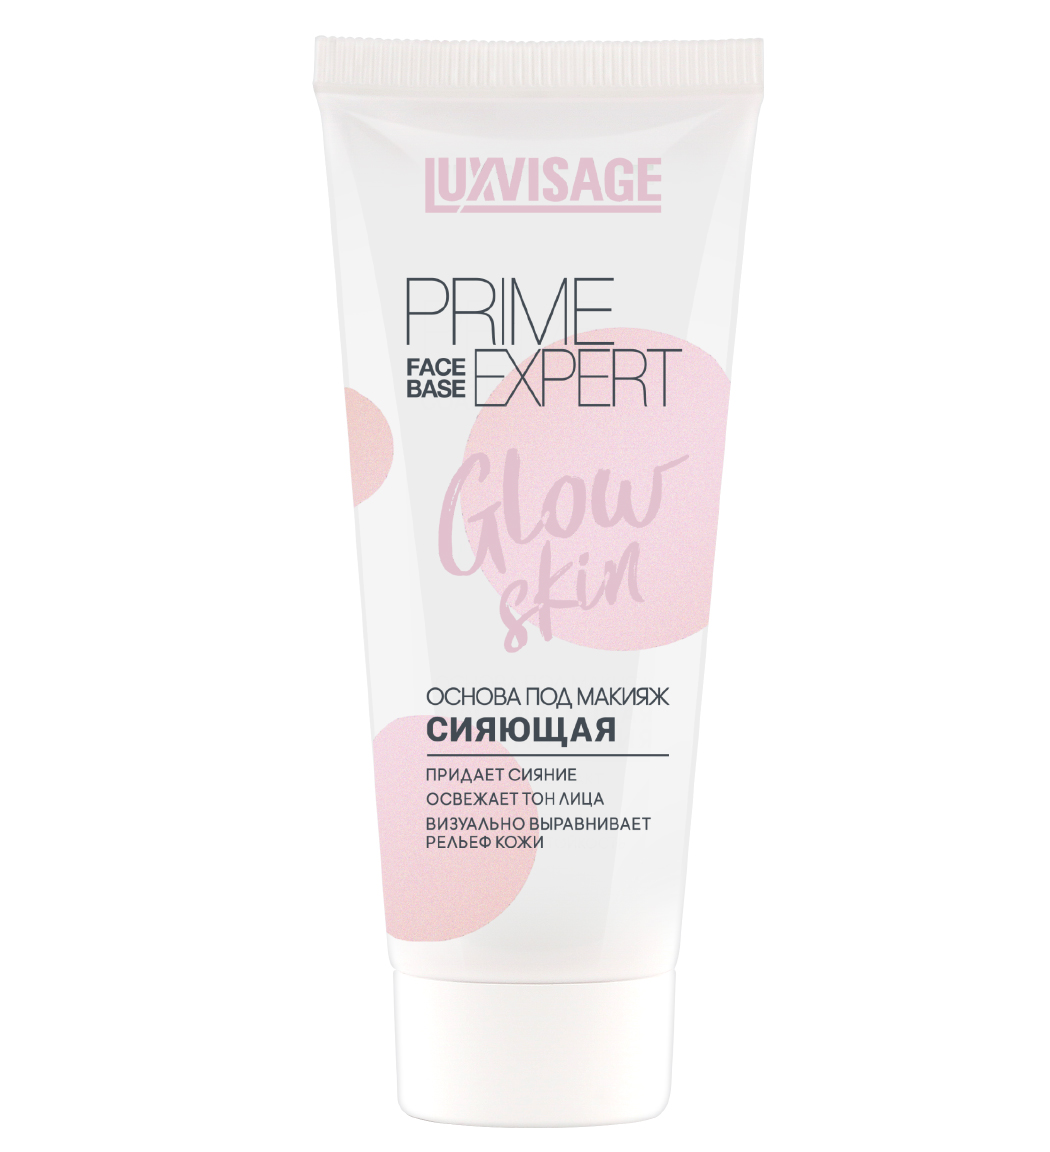 Lux Visage Основа под макияж "Prime Expert Glow Skin" - сияющая - 35 гр